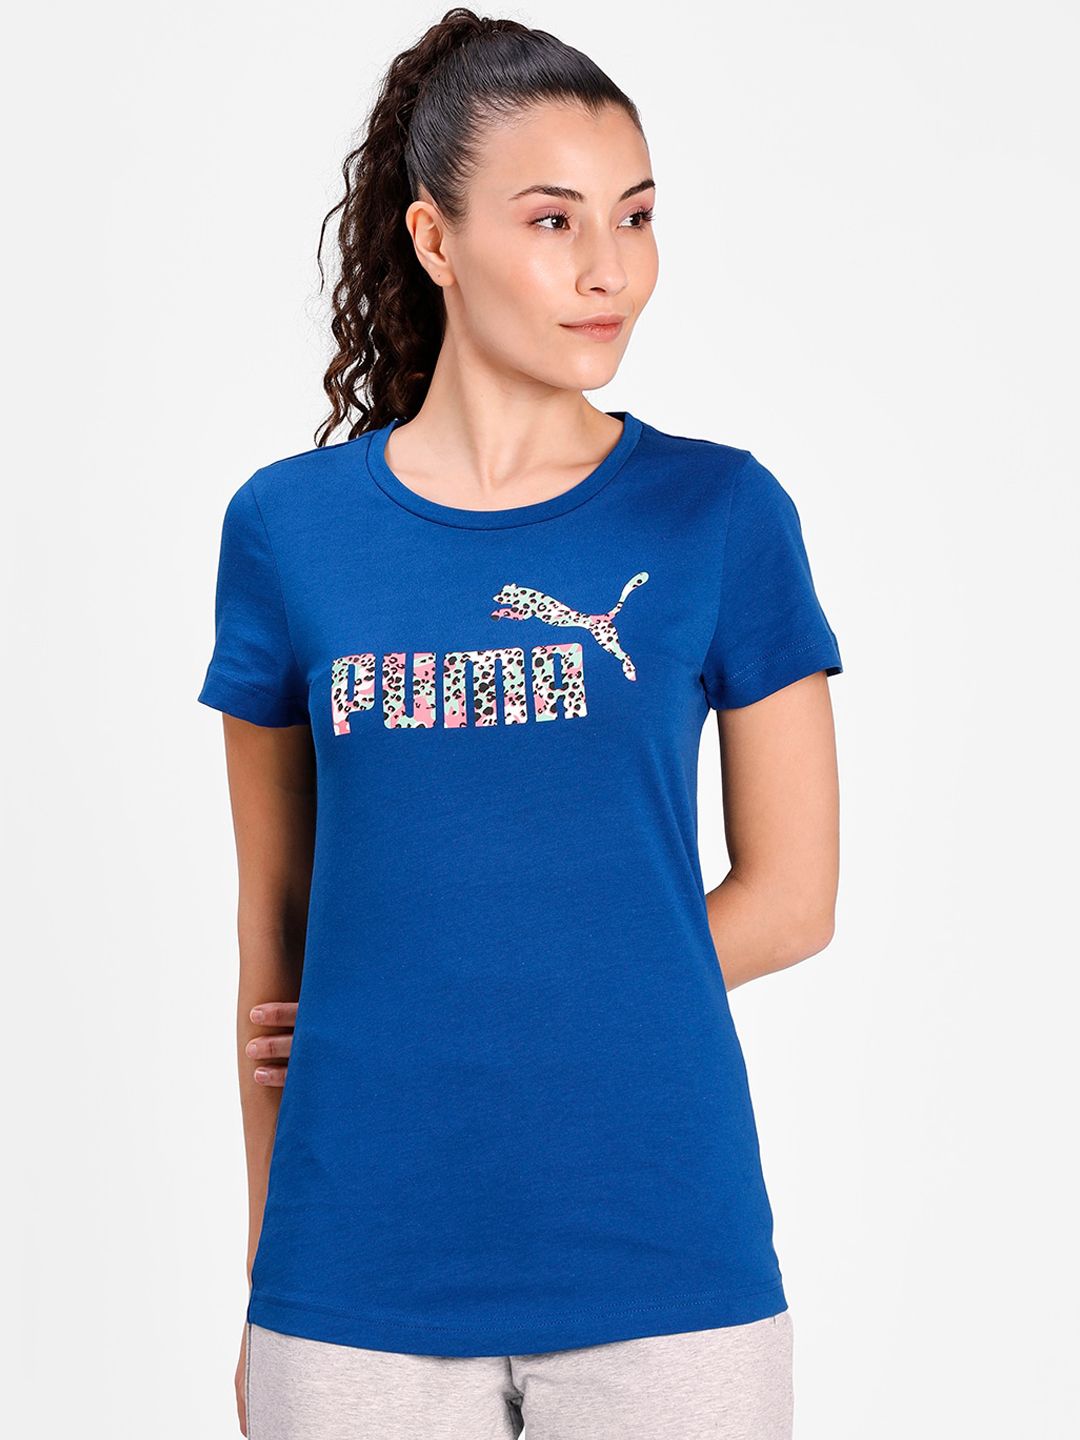 Puma Women Blue Printed Round Neck T-shirt Price in India